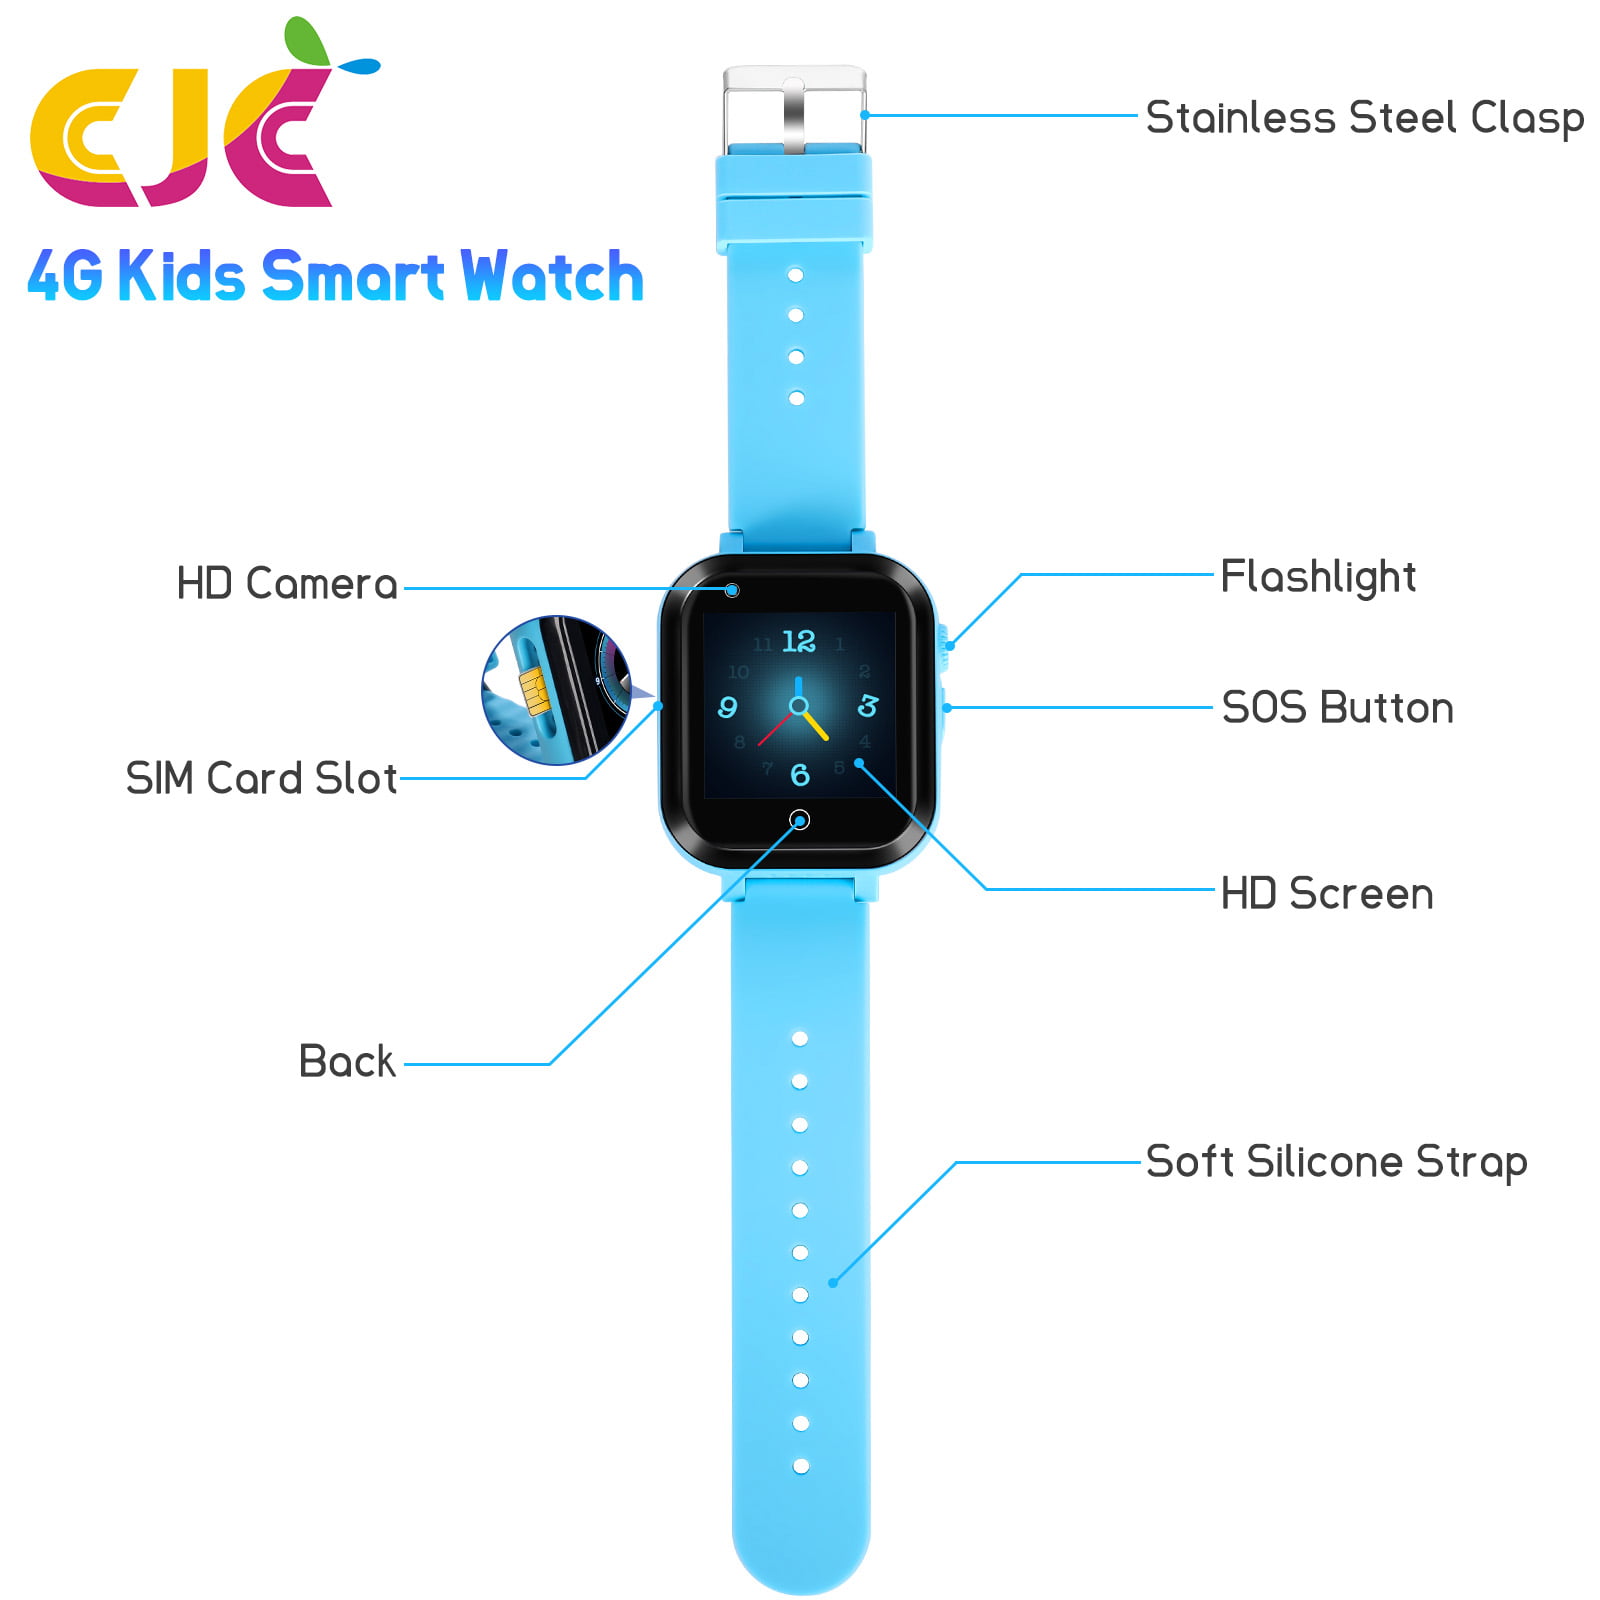 4G Kids Smart Watch, Outdoor LBS Tracker Smartwatch with 1.4" HD Touch IP67 Waterproof Wifi Smart Phone Watch for Andriod iOS Phones, Black -